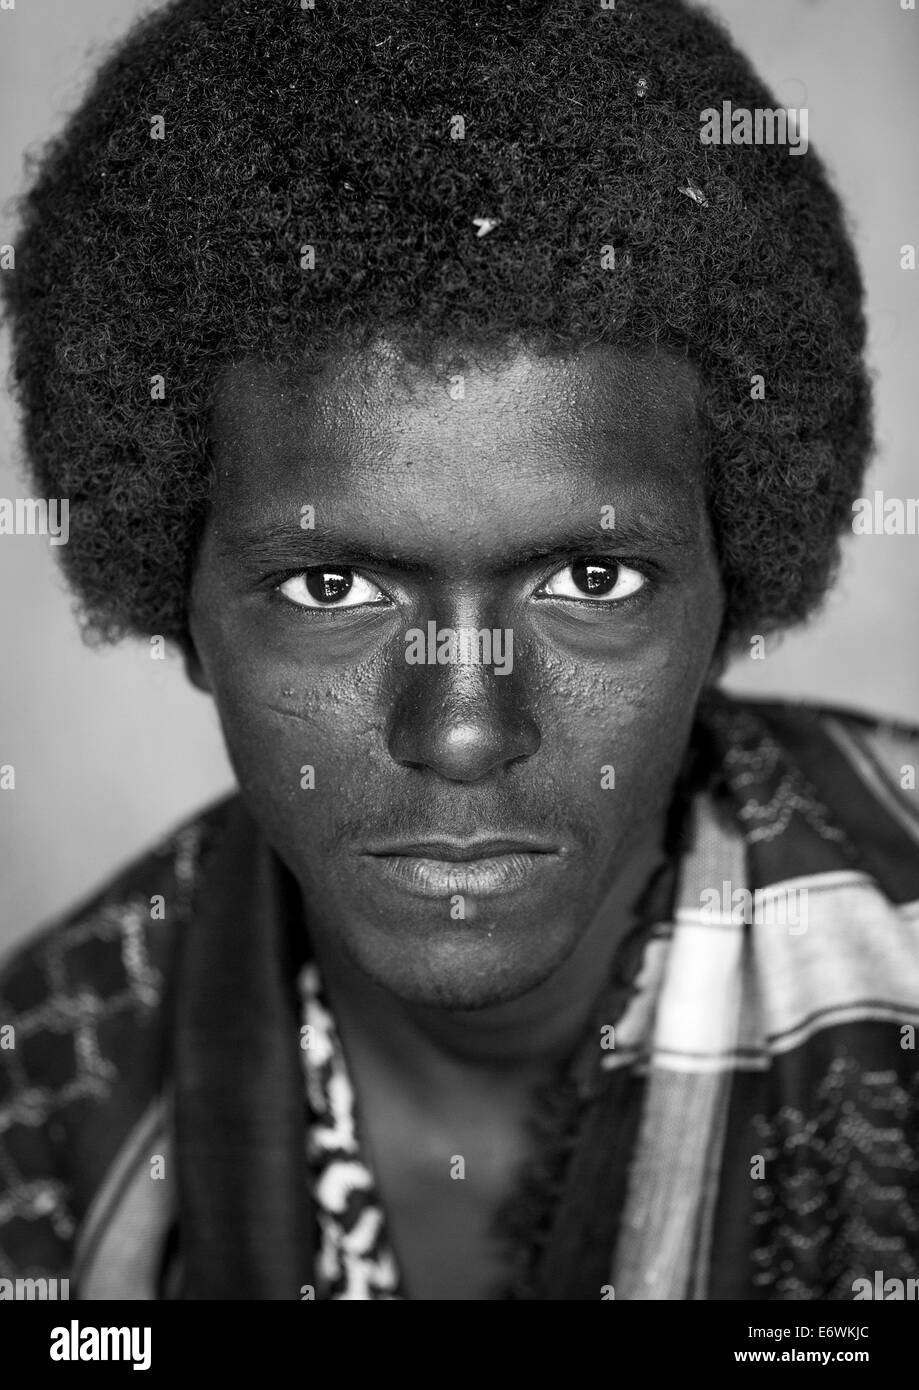 Etnia Afar Uomo con capelli Afro, Assayta, Etiopia Foto stock - Alamy